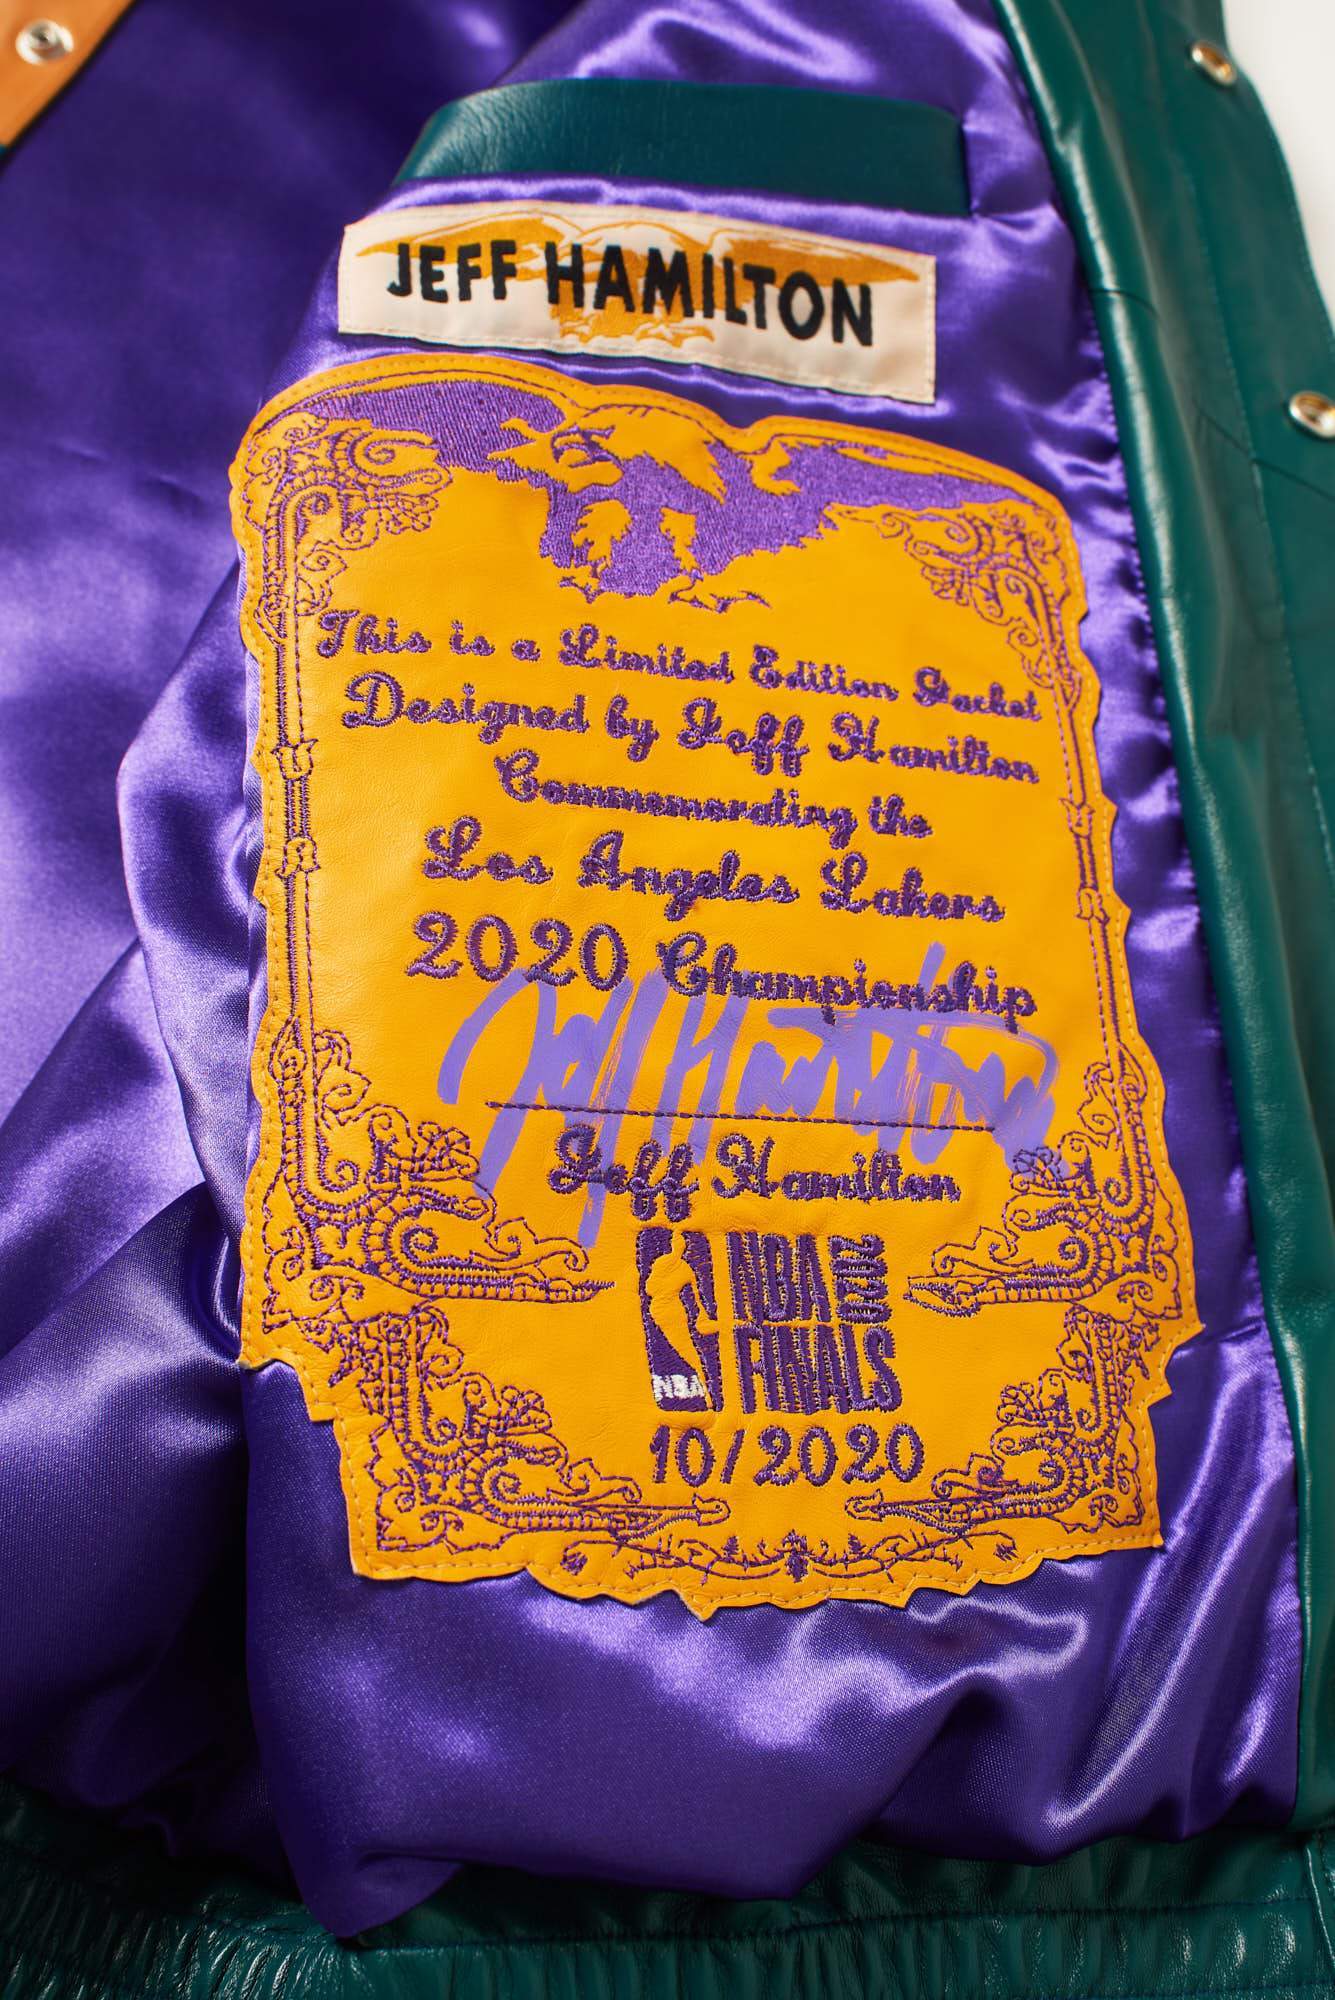 Los Angeles Lakers 2020 Championship Jacket